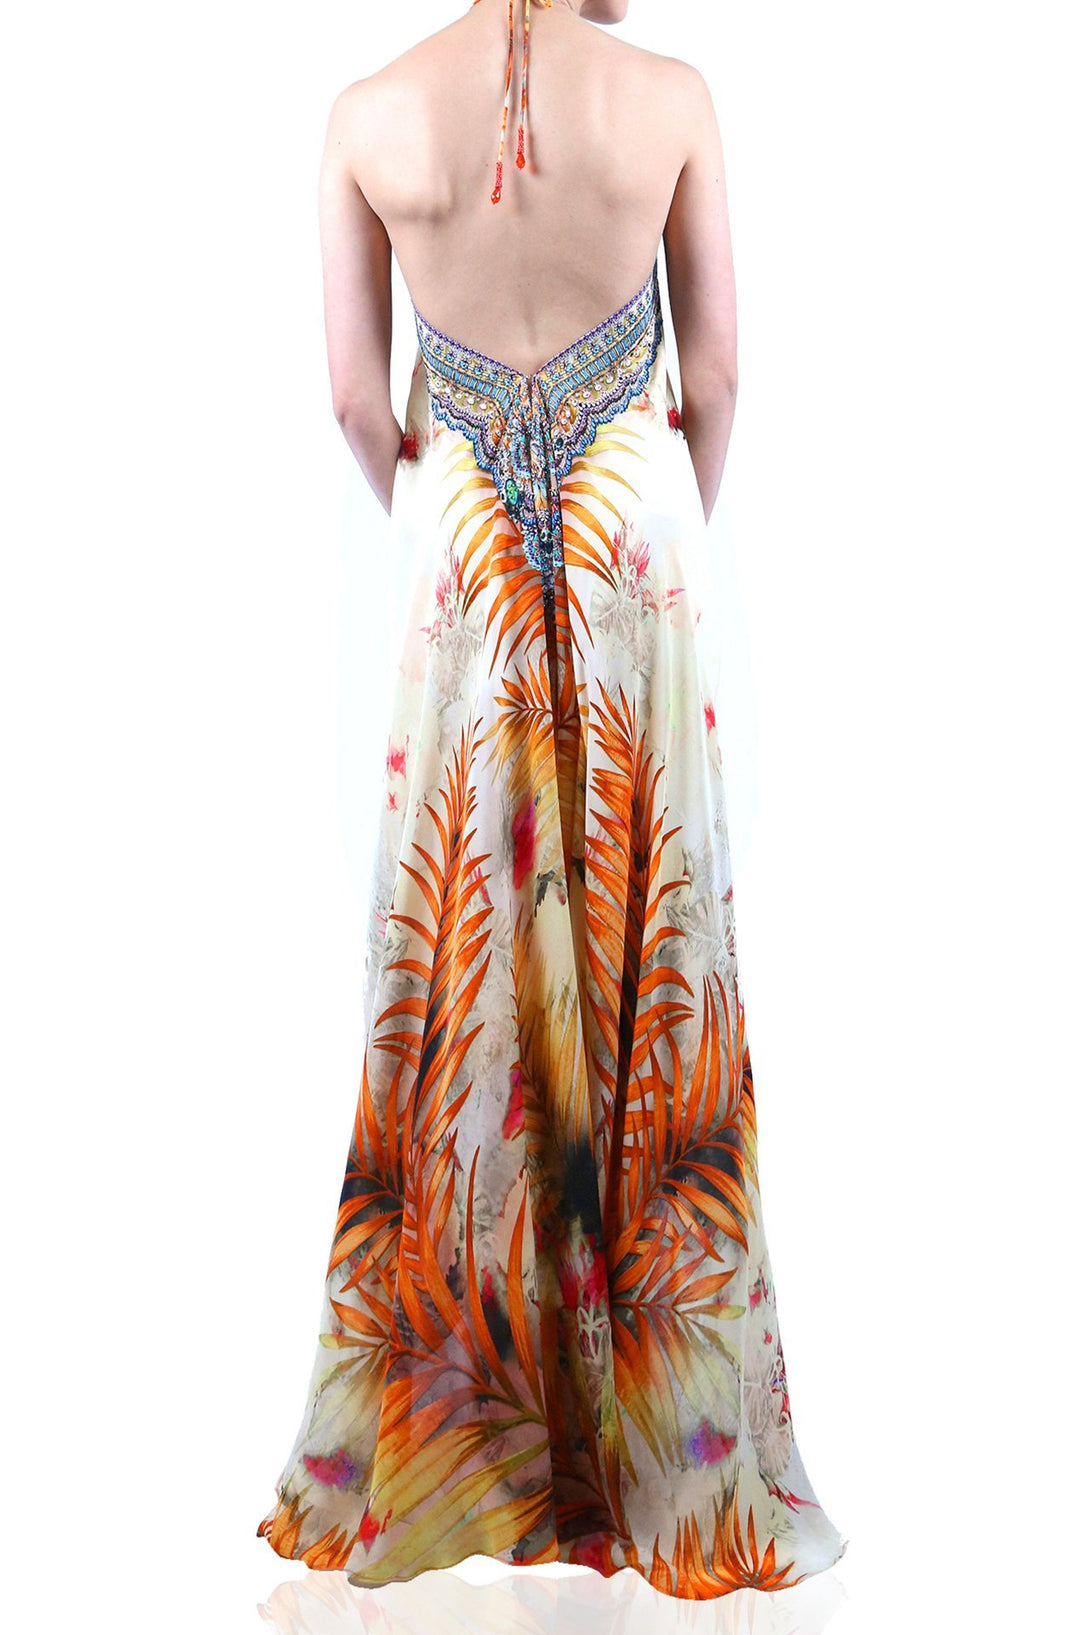 long summer dresses for women, plunge neck cocktail dress, Shahida Parides,